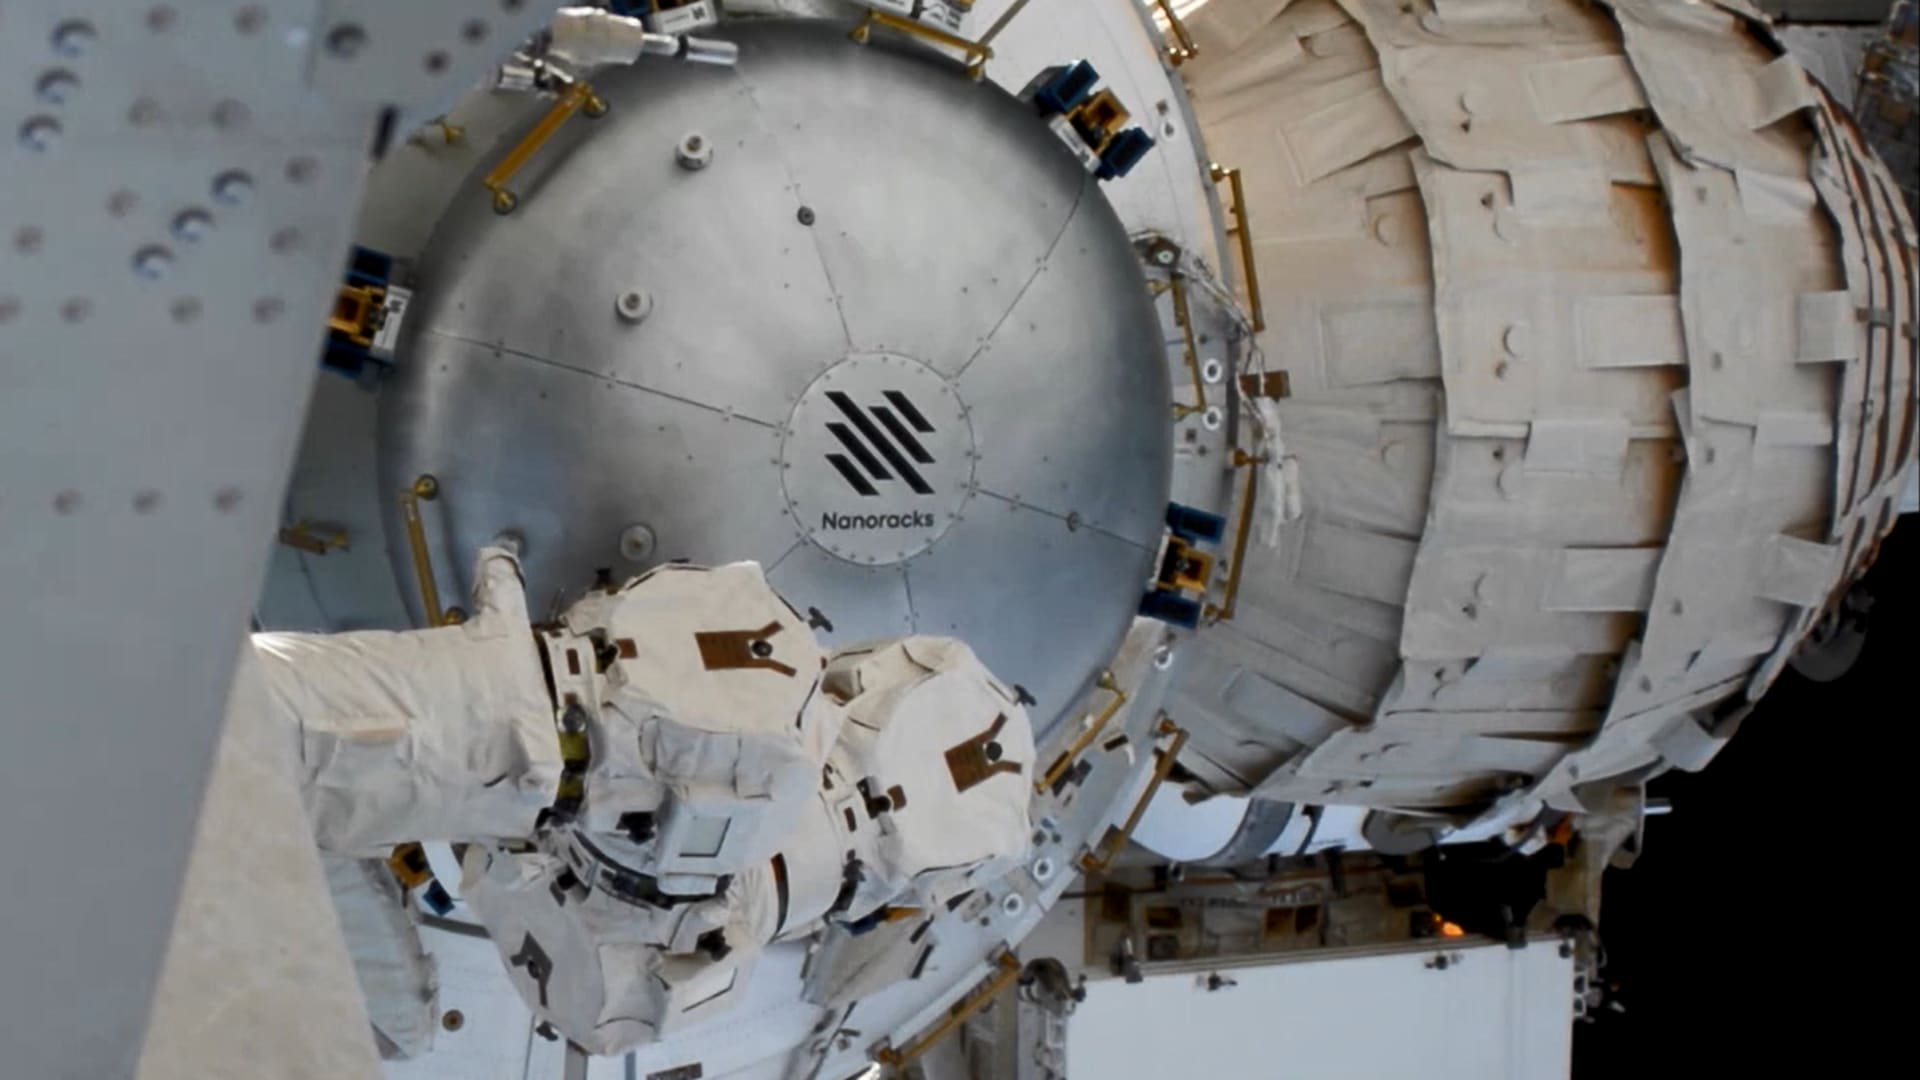 Nanoracks's Bishop airlock installed on the International Space Station.